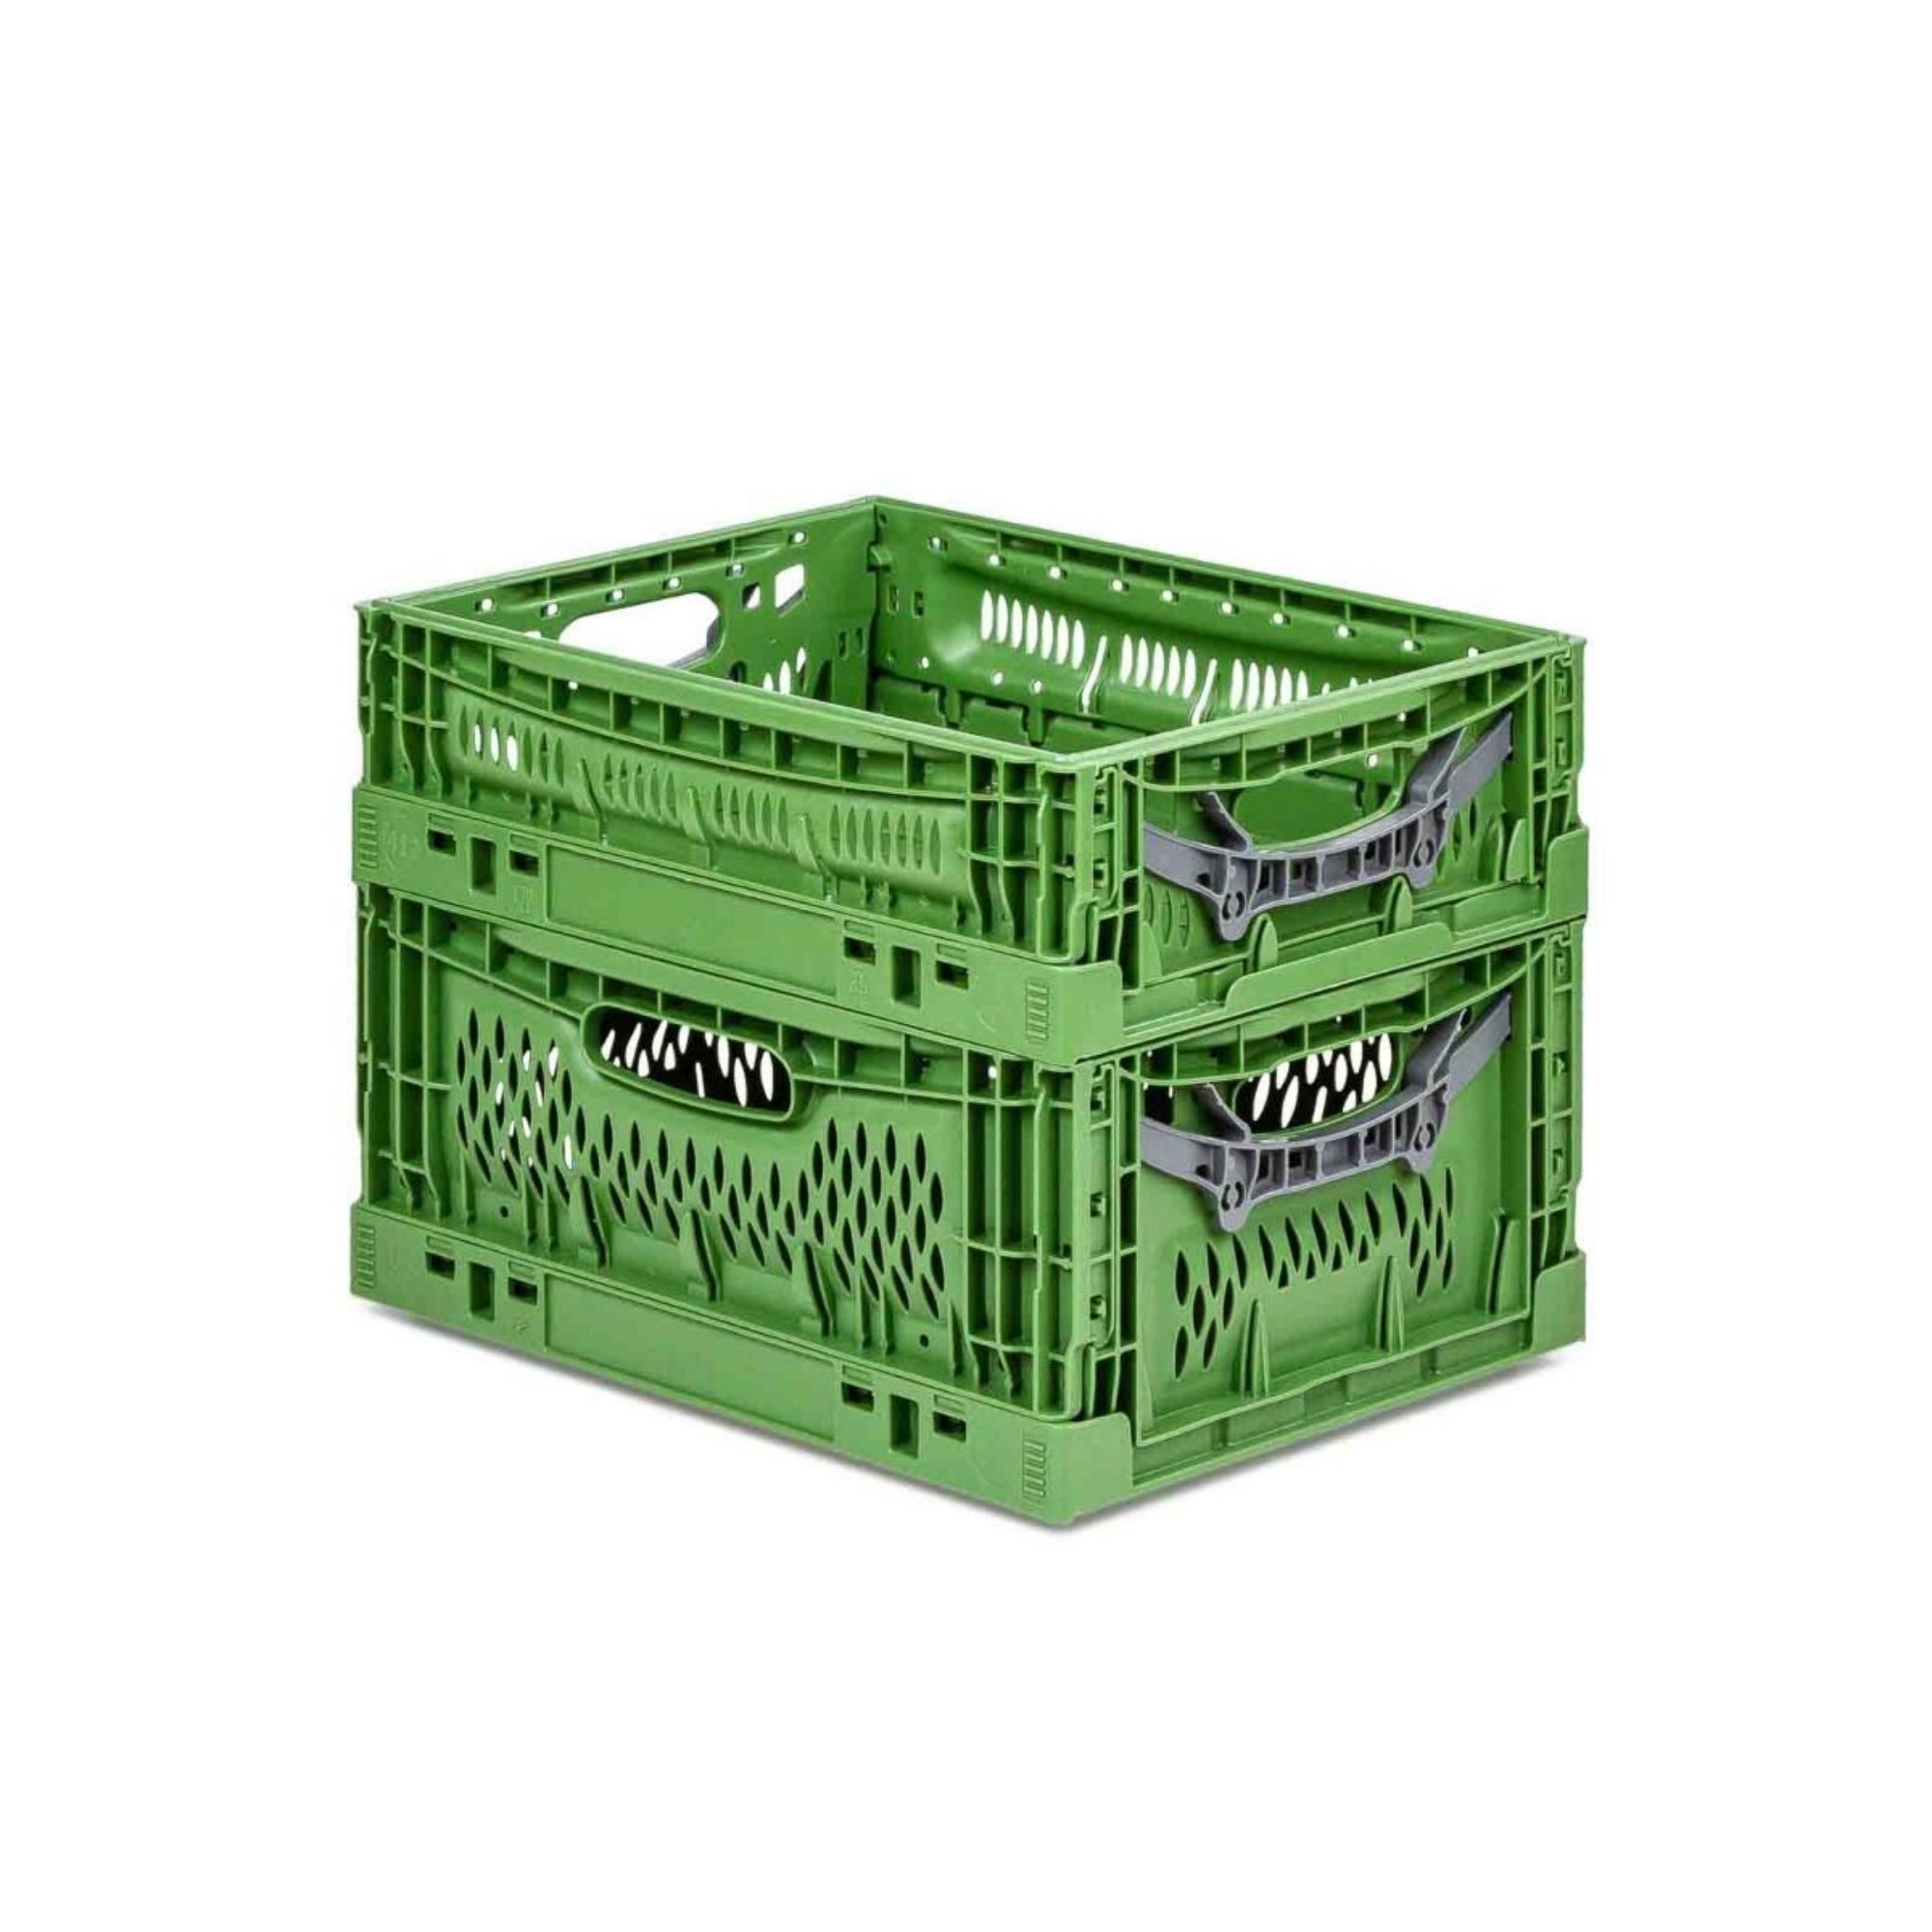 SuperSparSet 5x Stabile Profi-Klappbox Chameleon in Industriequalität | HxBxT 18x30x40cm | 17 Liter | klappbar stapelbar durchbrochen lebensmittelecht | Eurobox Eurobehälter Transportbehälter Stapelbehlter Faltbox